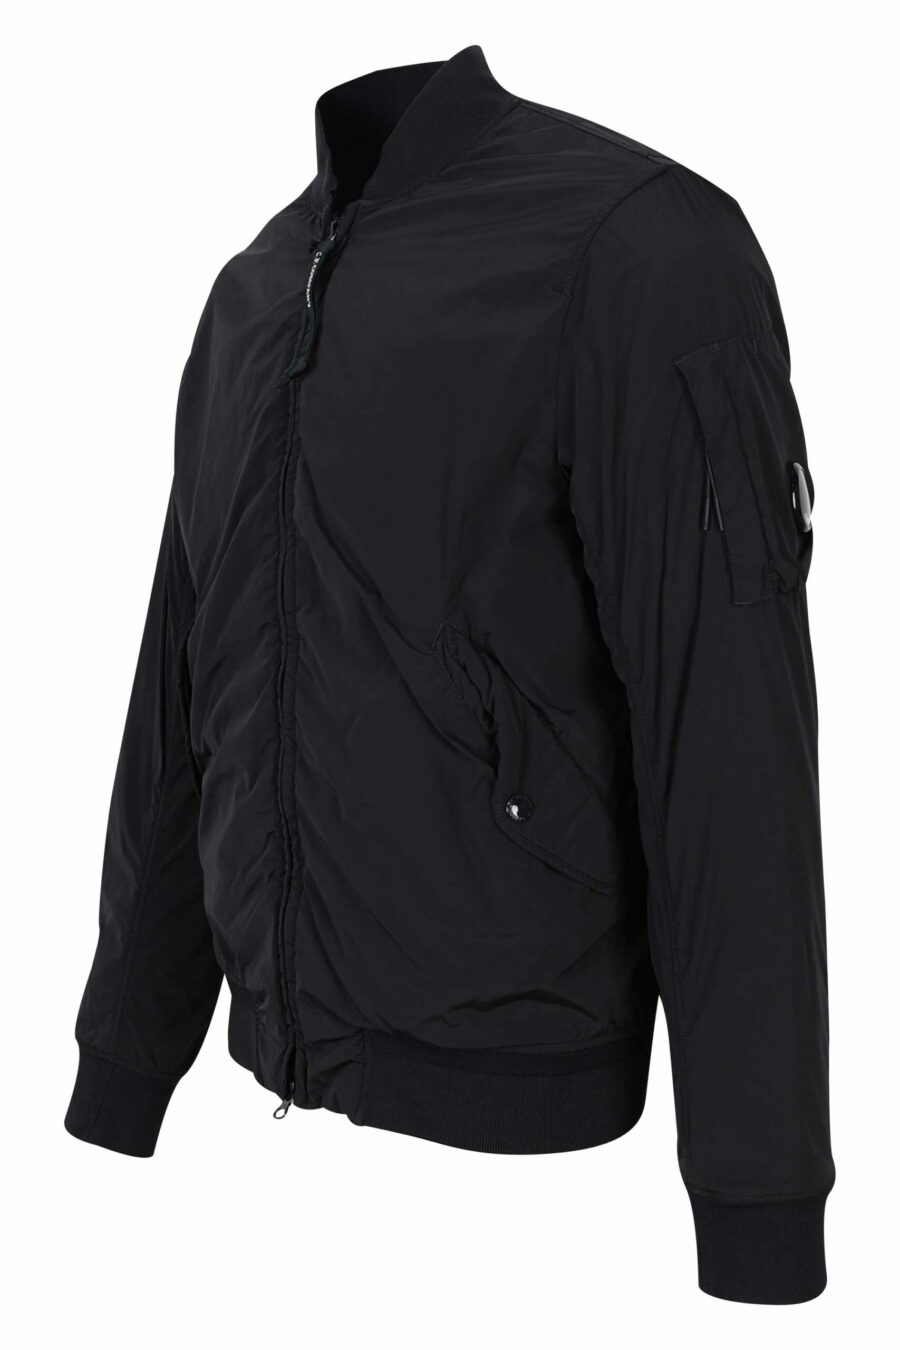 Black bomber jacket with side lens logo - 7620943606911 1 1 scaled